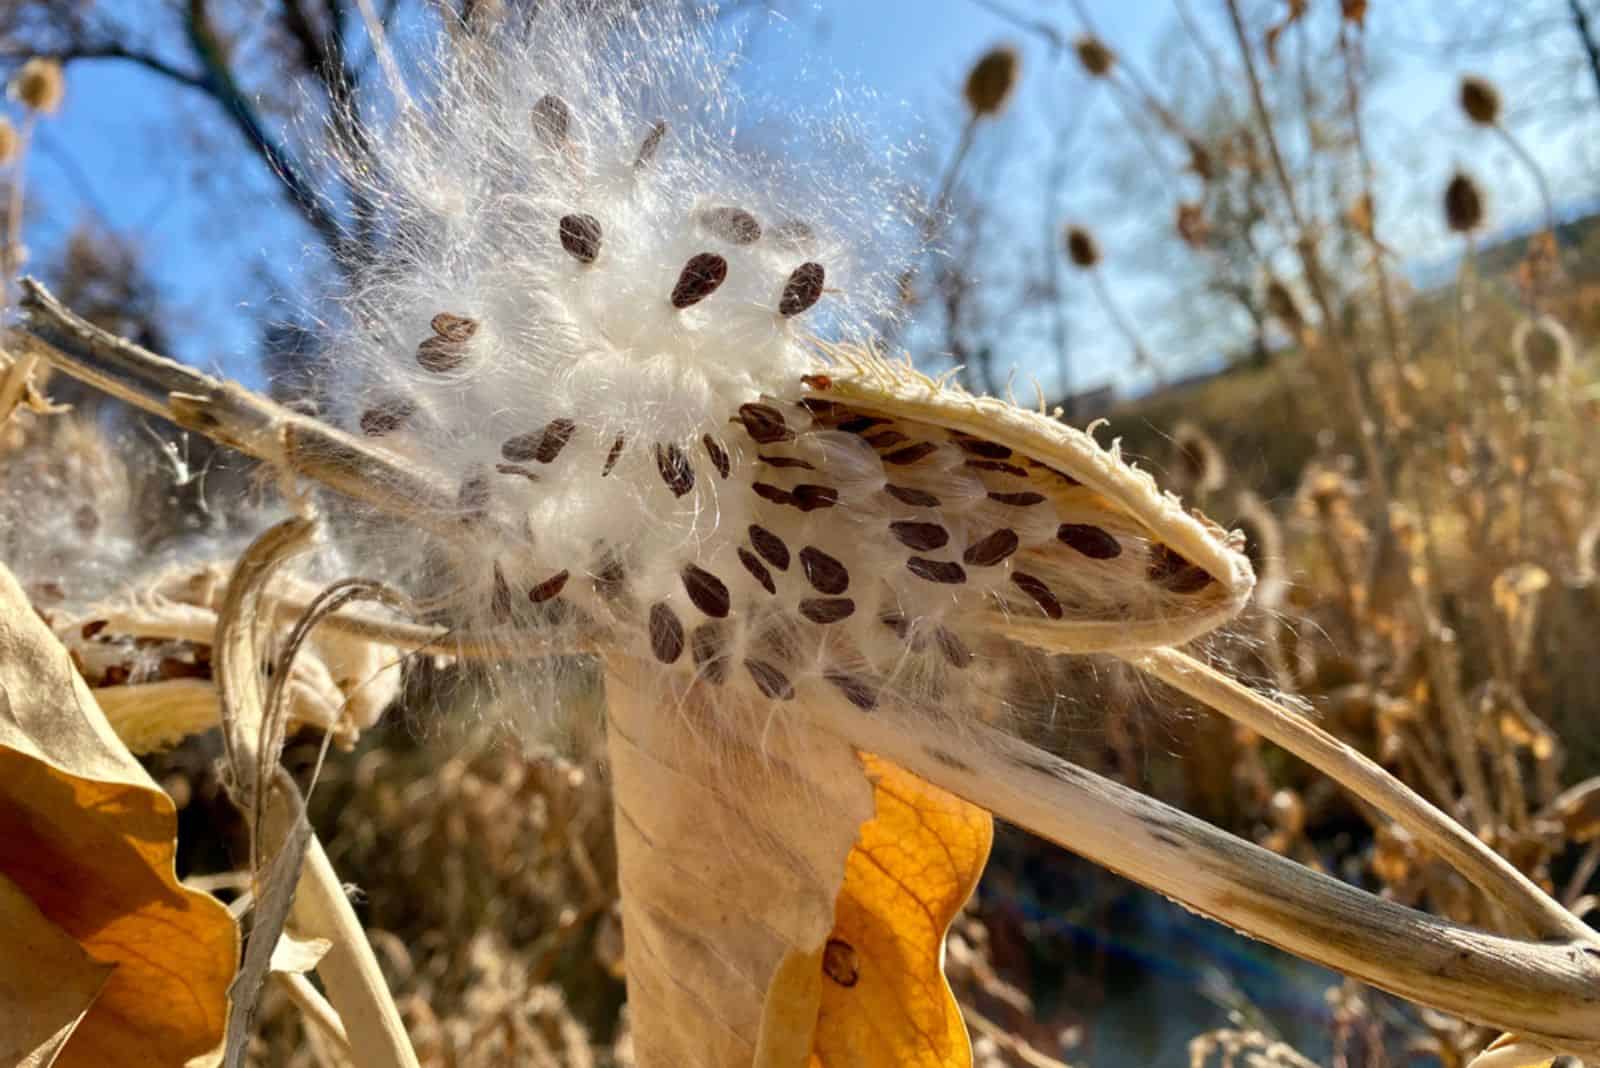 millkweed seeds on a pod